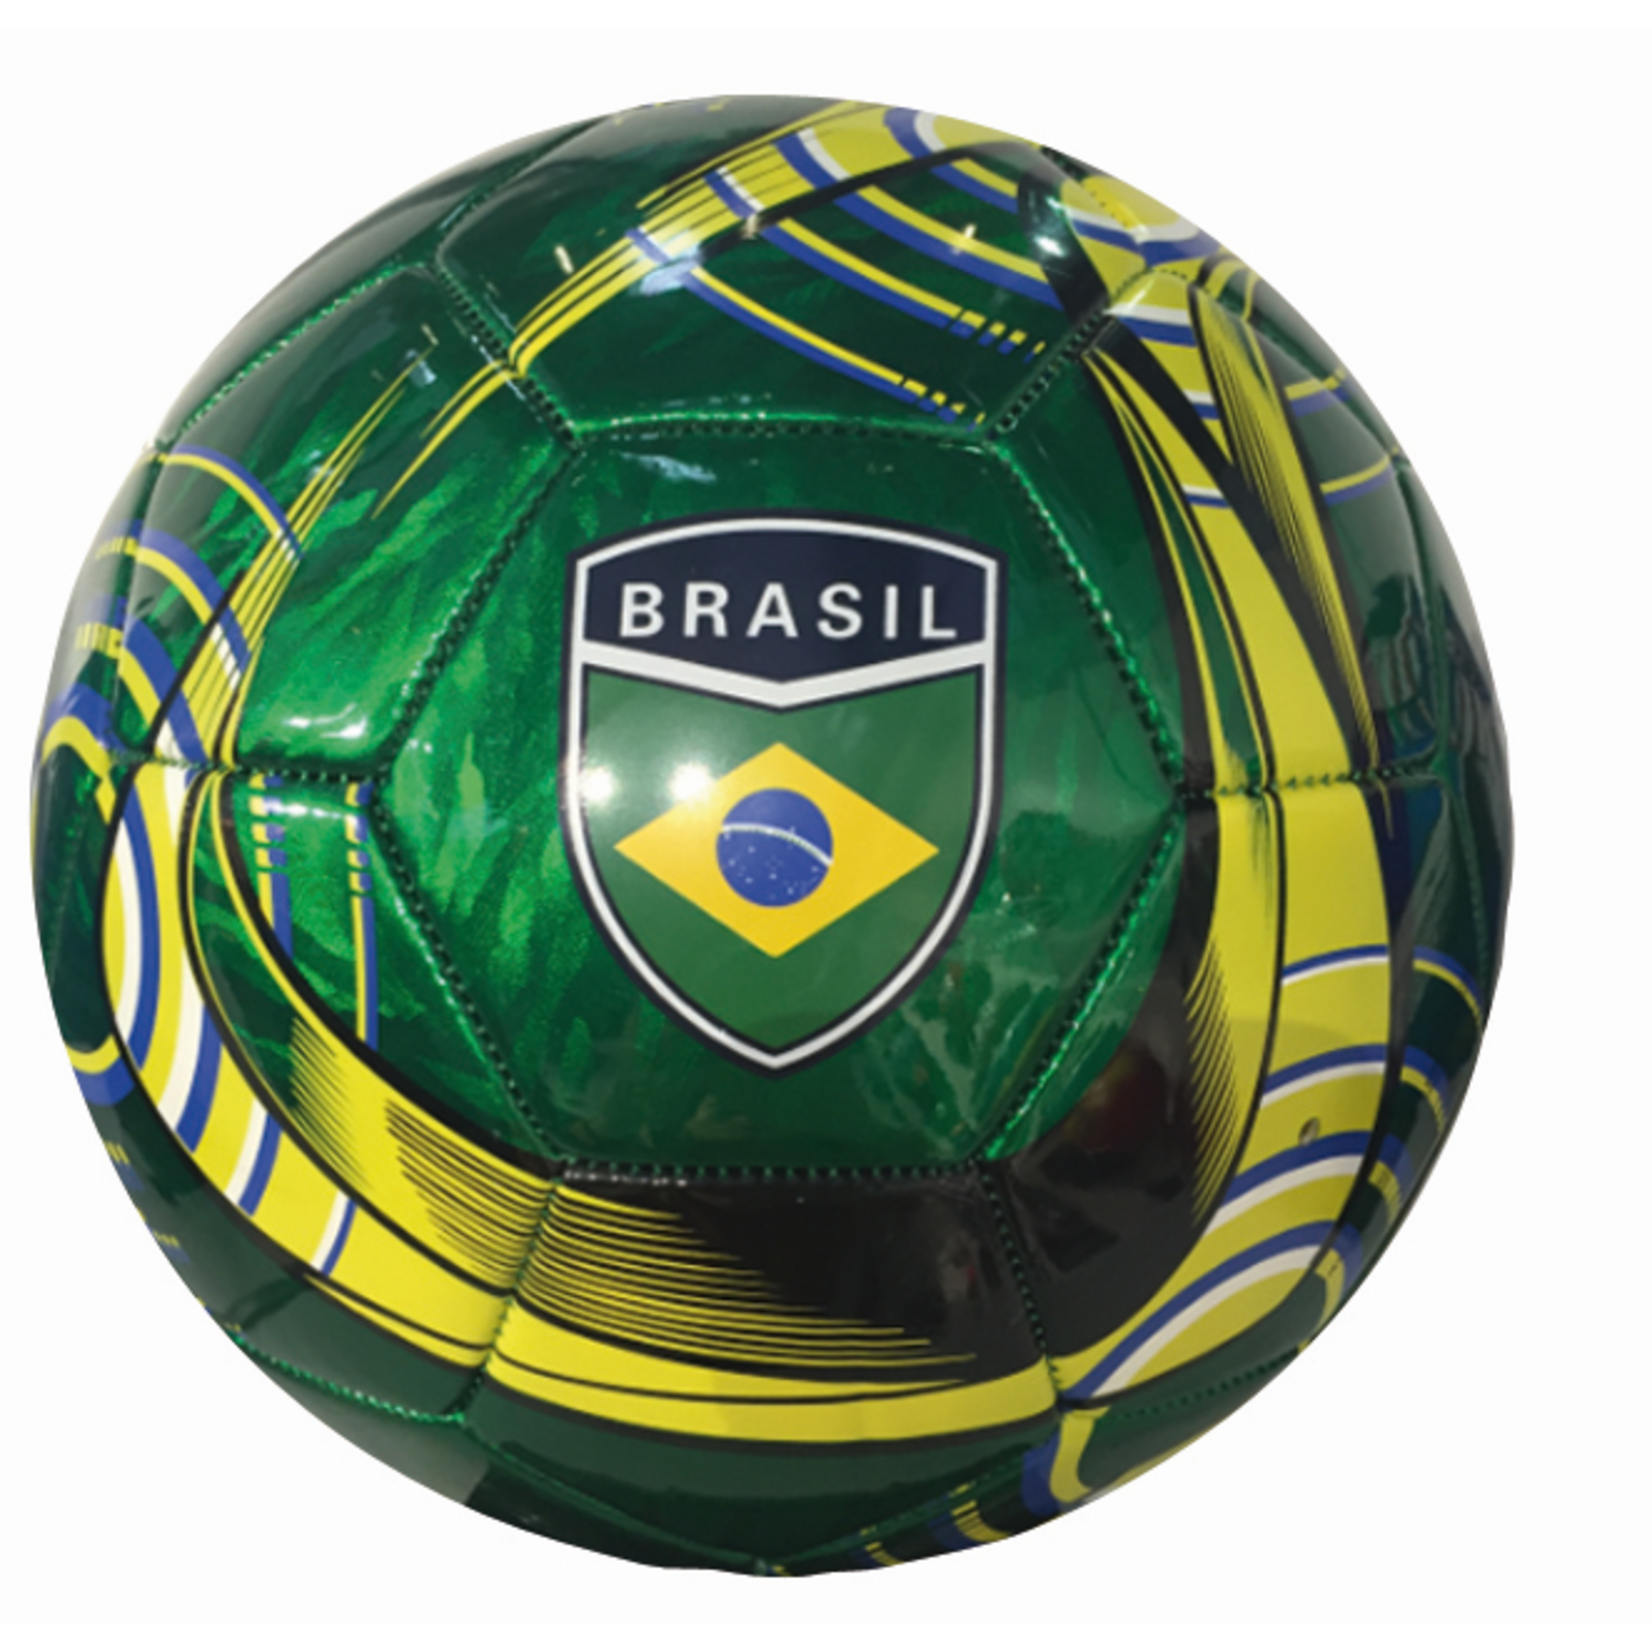 Berio ete Ballon Soccer Guts France/Brésil